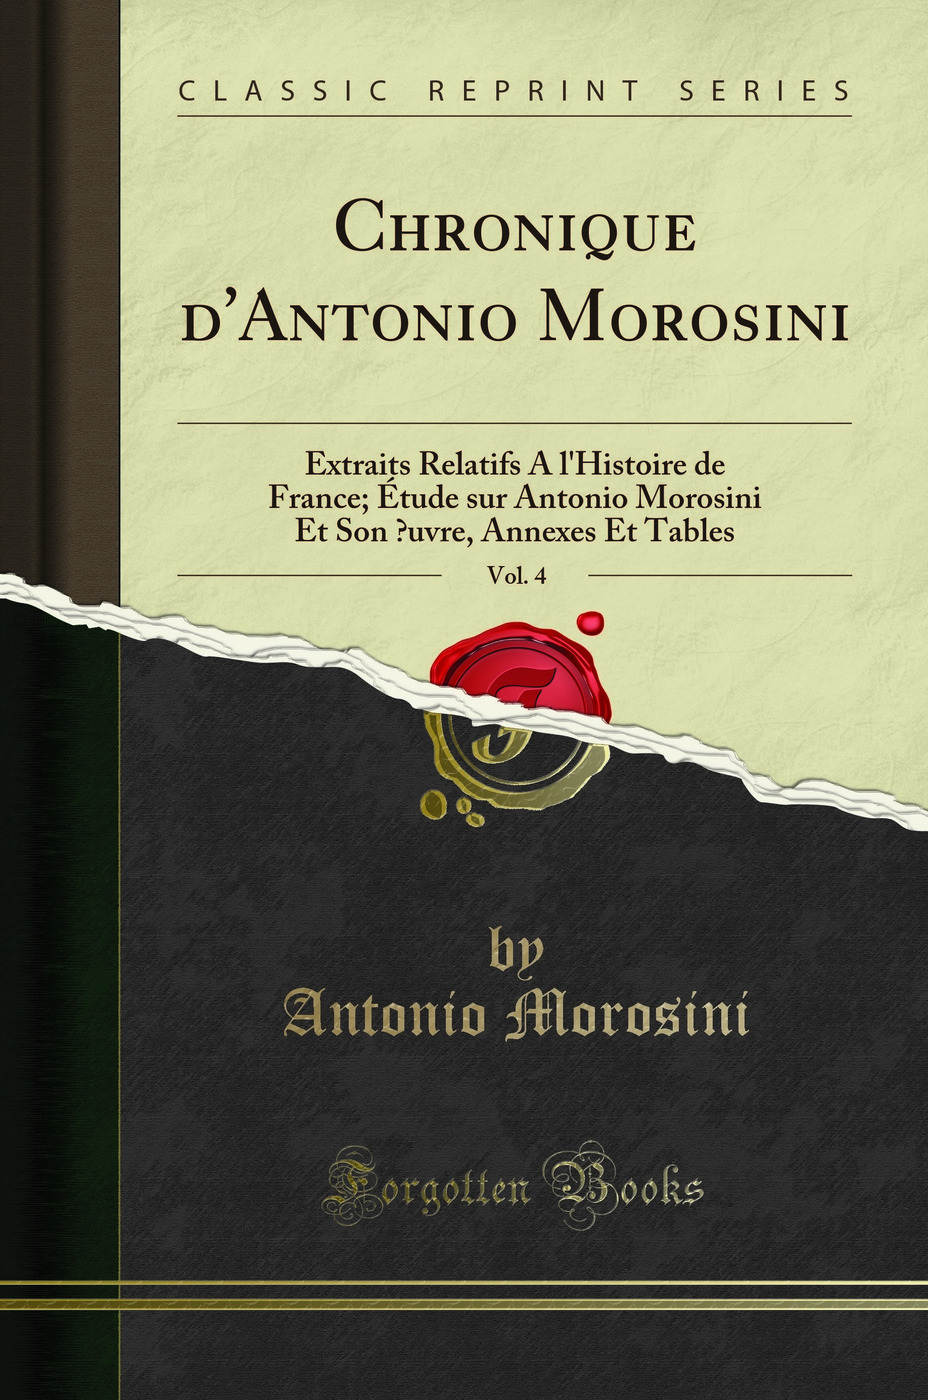 Chronique d'Antonio Morosini, Vol. 4: Extraits Relatifs A l'Histoire de France - Antonio Morosini